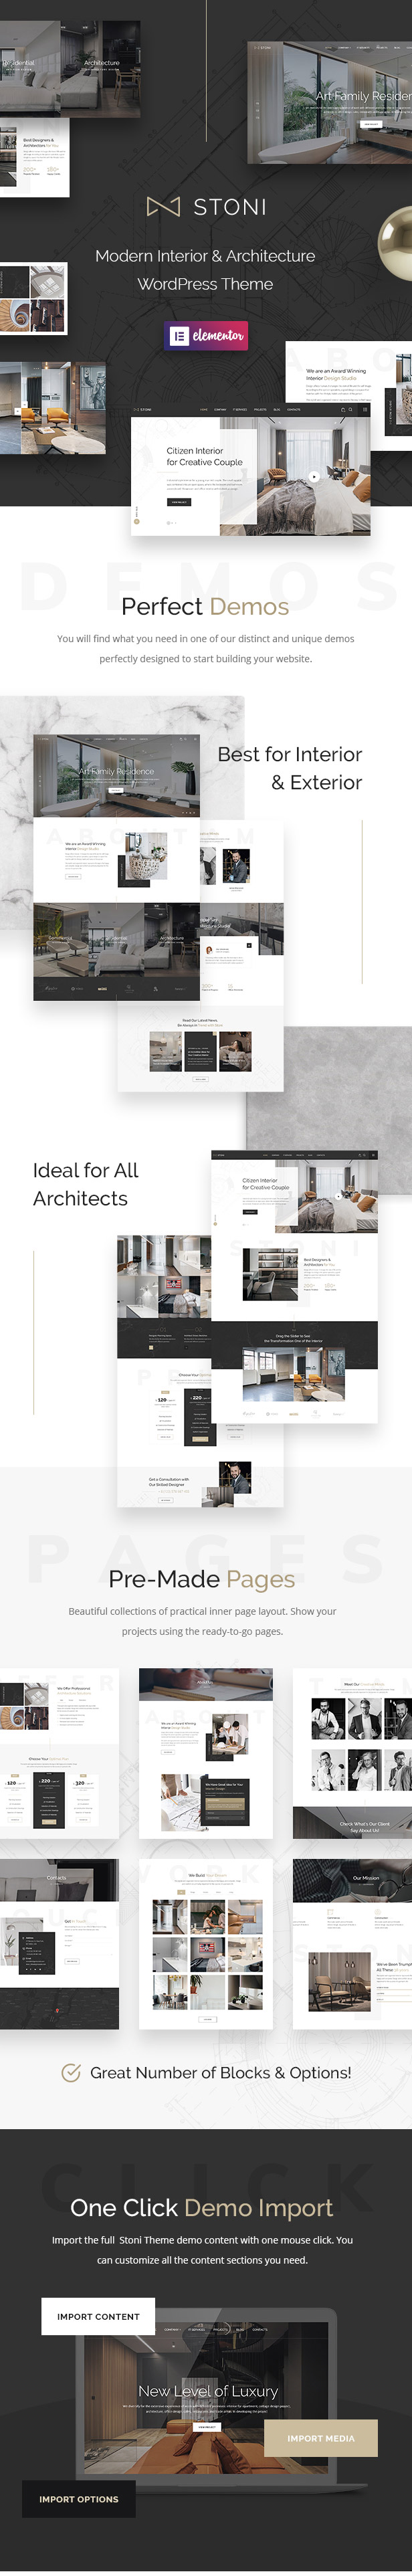 Stoni - Architecture Agency WordPress Theme - 2